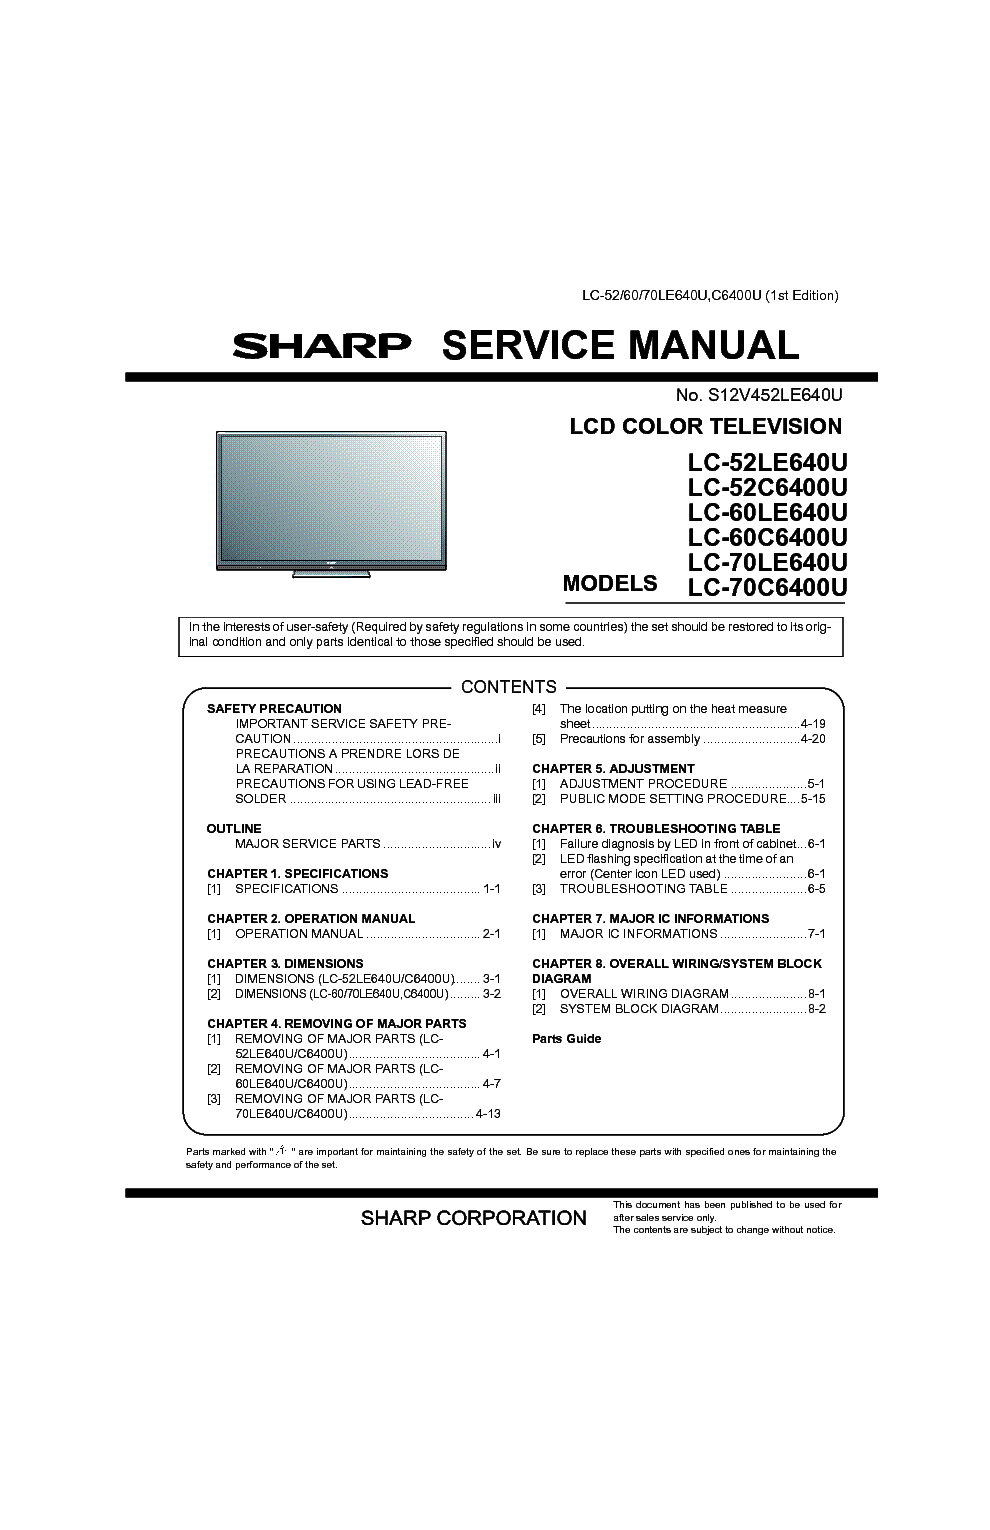 SHARP LC-52-60-70LE640U LC-52-60-70C6400U service manual (1st page)